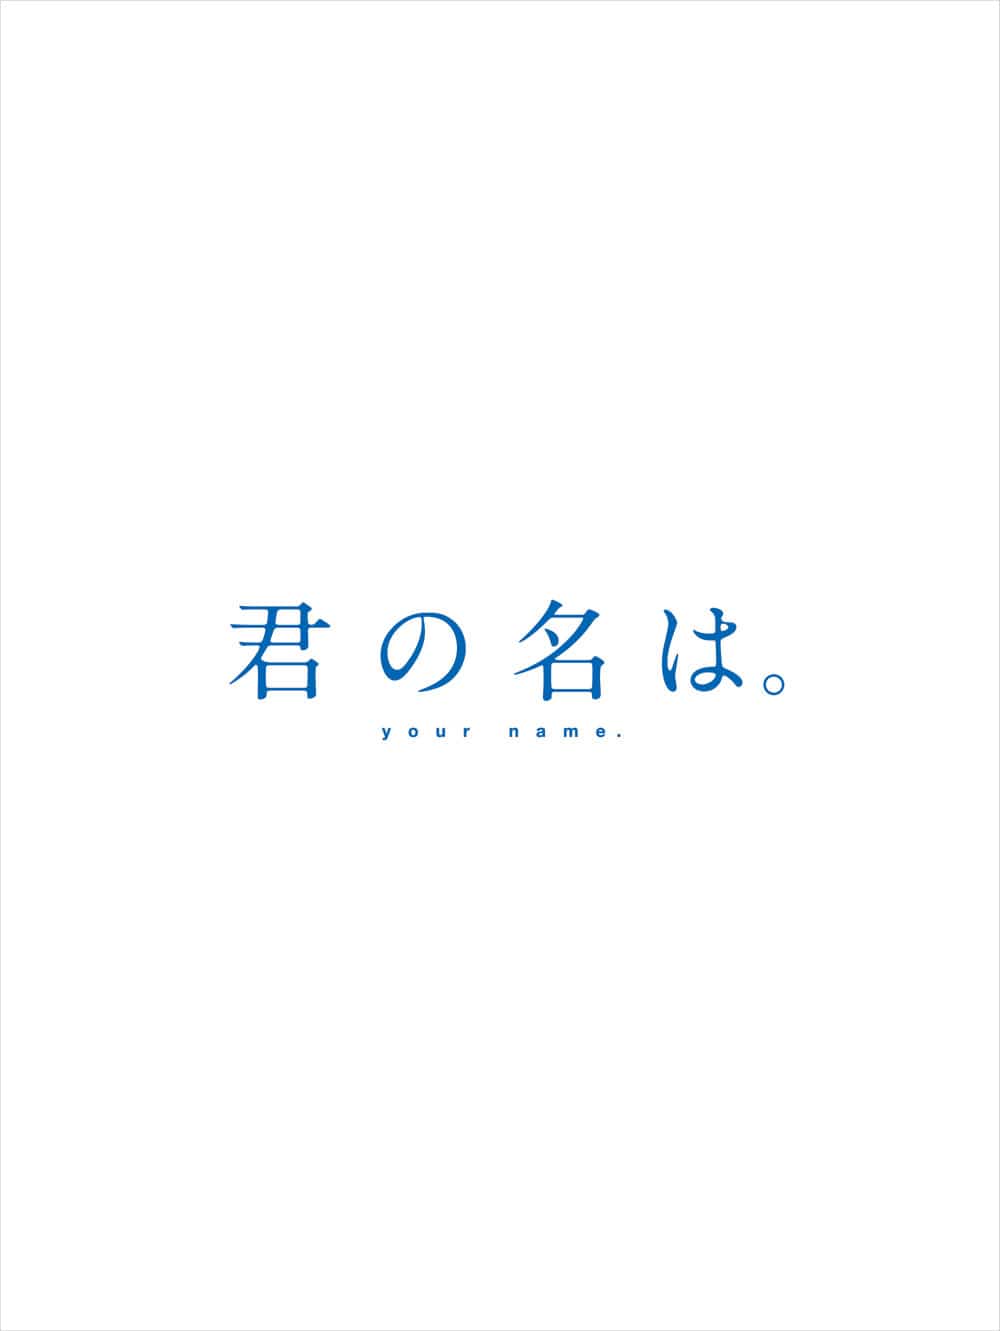 Toho Animation Store限定版 君の名は Blu Ray コレクターズ エディション 4k Ultra Hd Blu Ray 同梱5枚組 初回生産限定 作品一覧 Toho Animation Store 東宝アニメーションストア